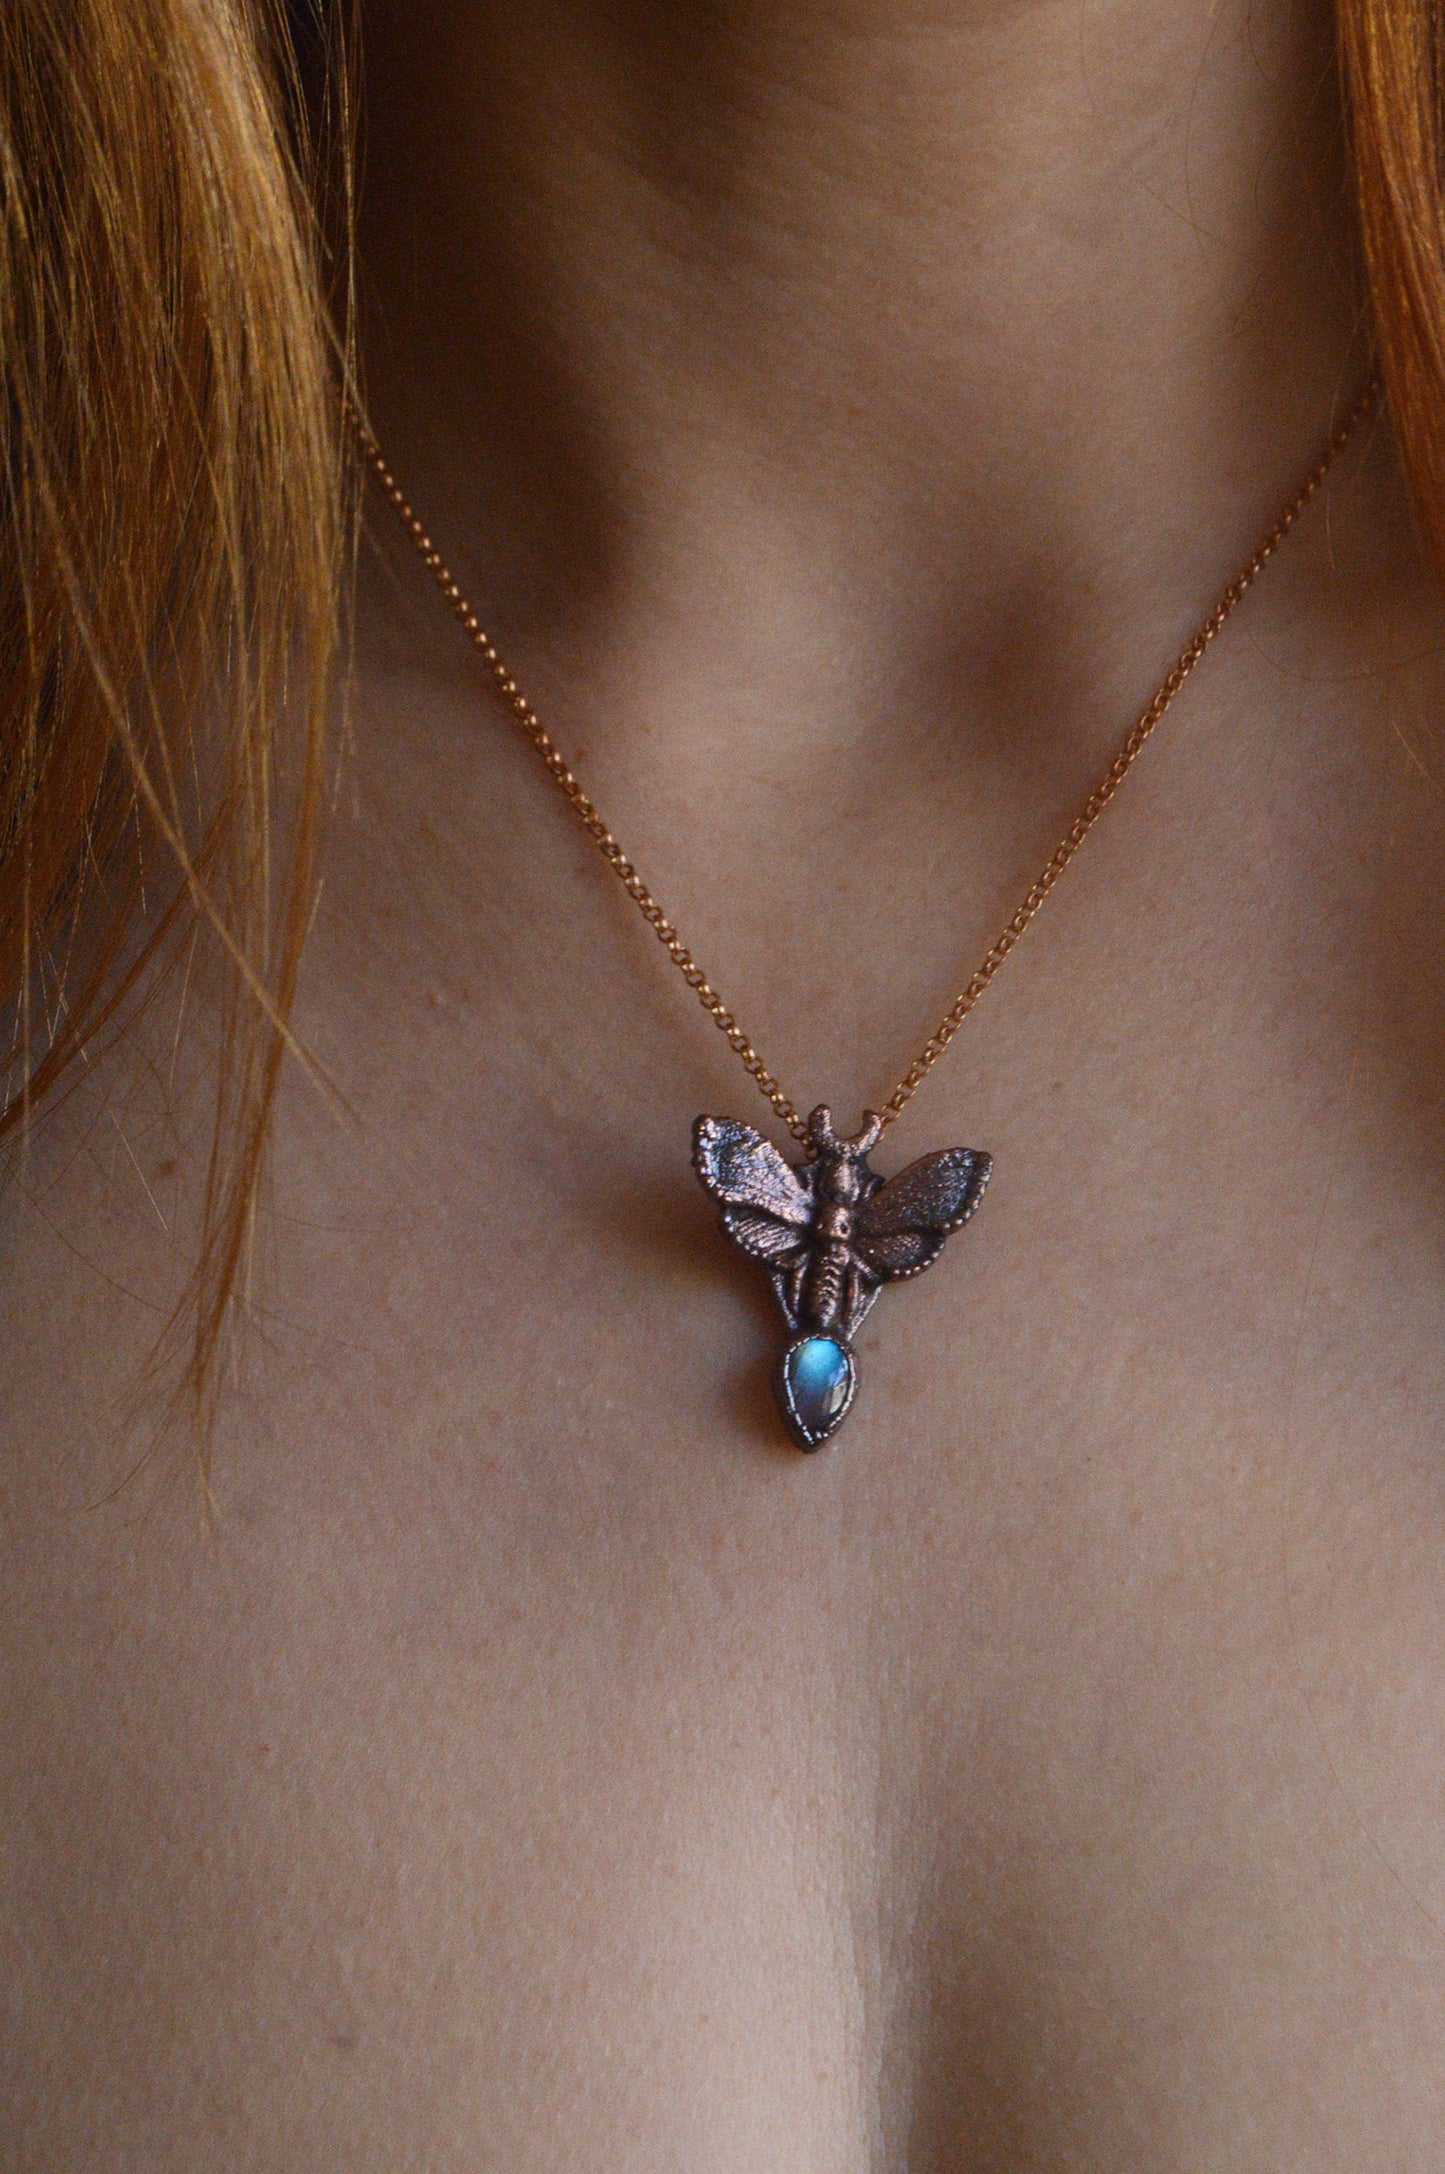 Dainty moth copper necklace with flashy labradorite stone. Witchy boho magic jewellery